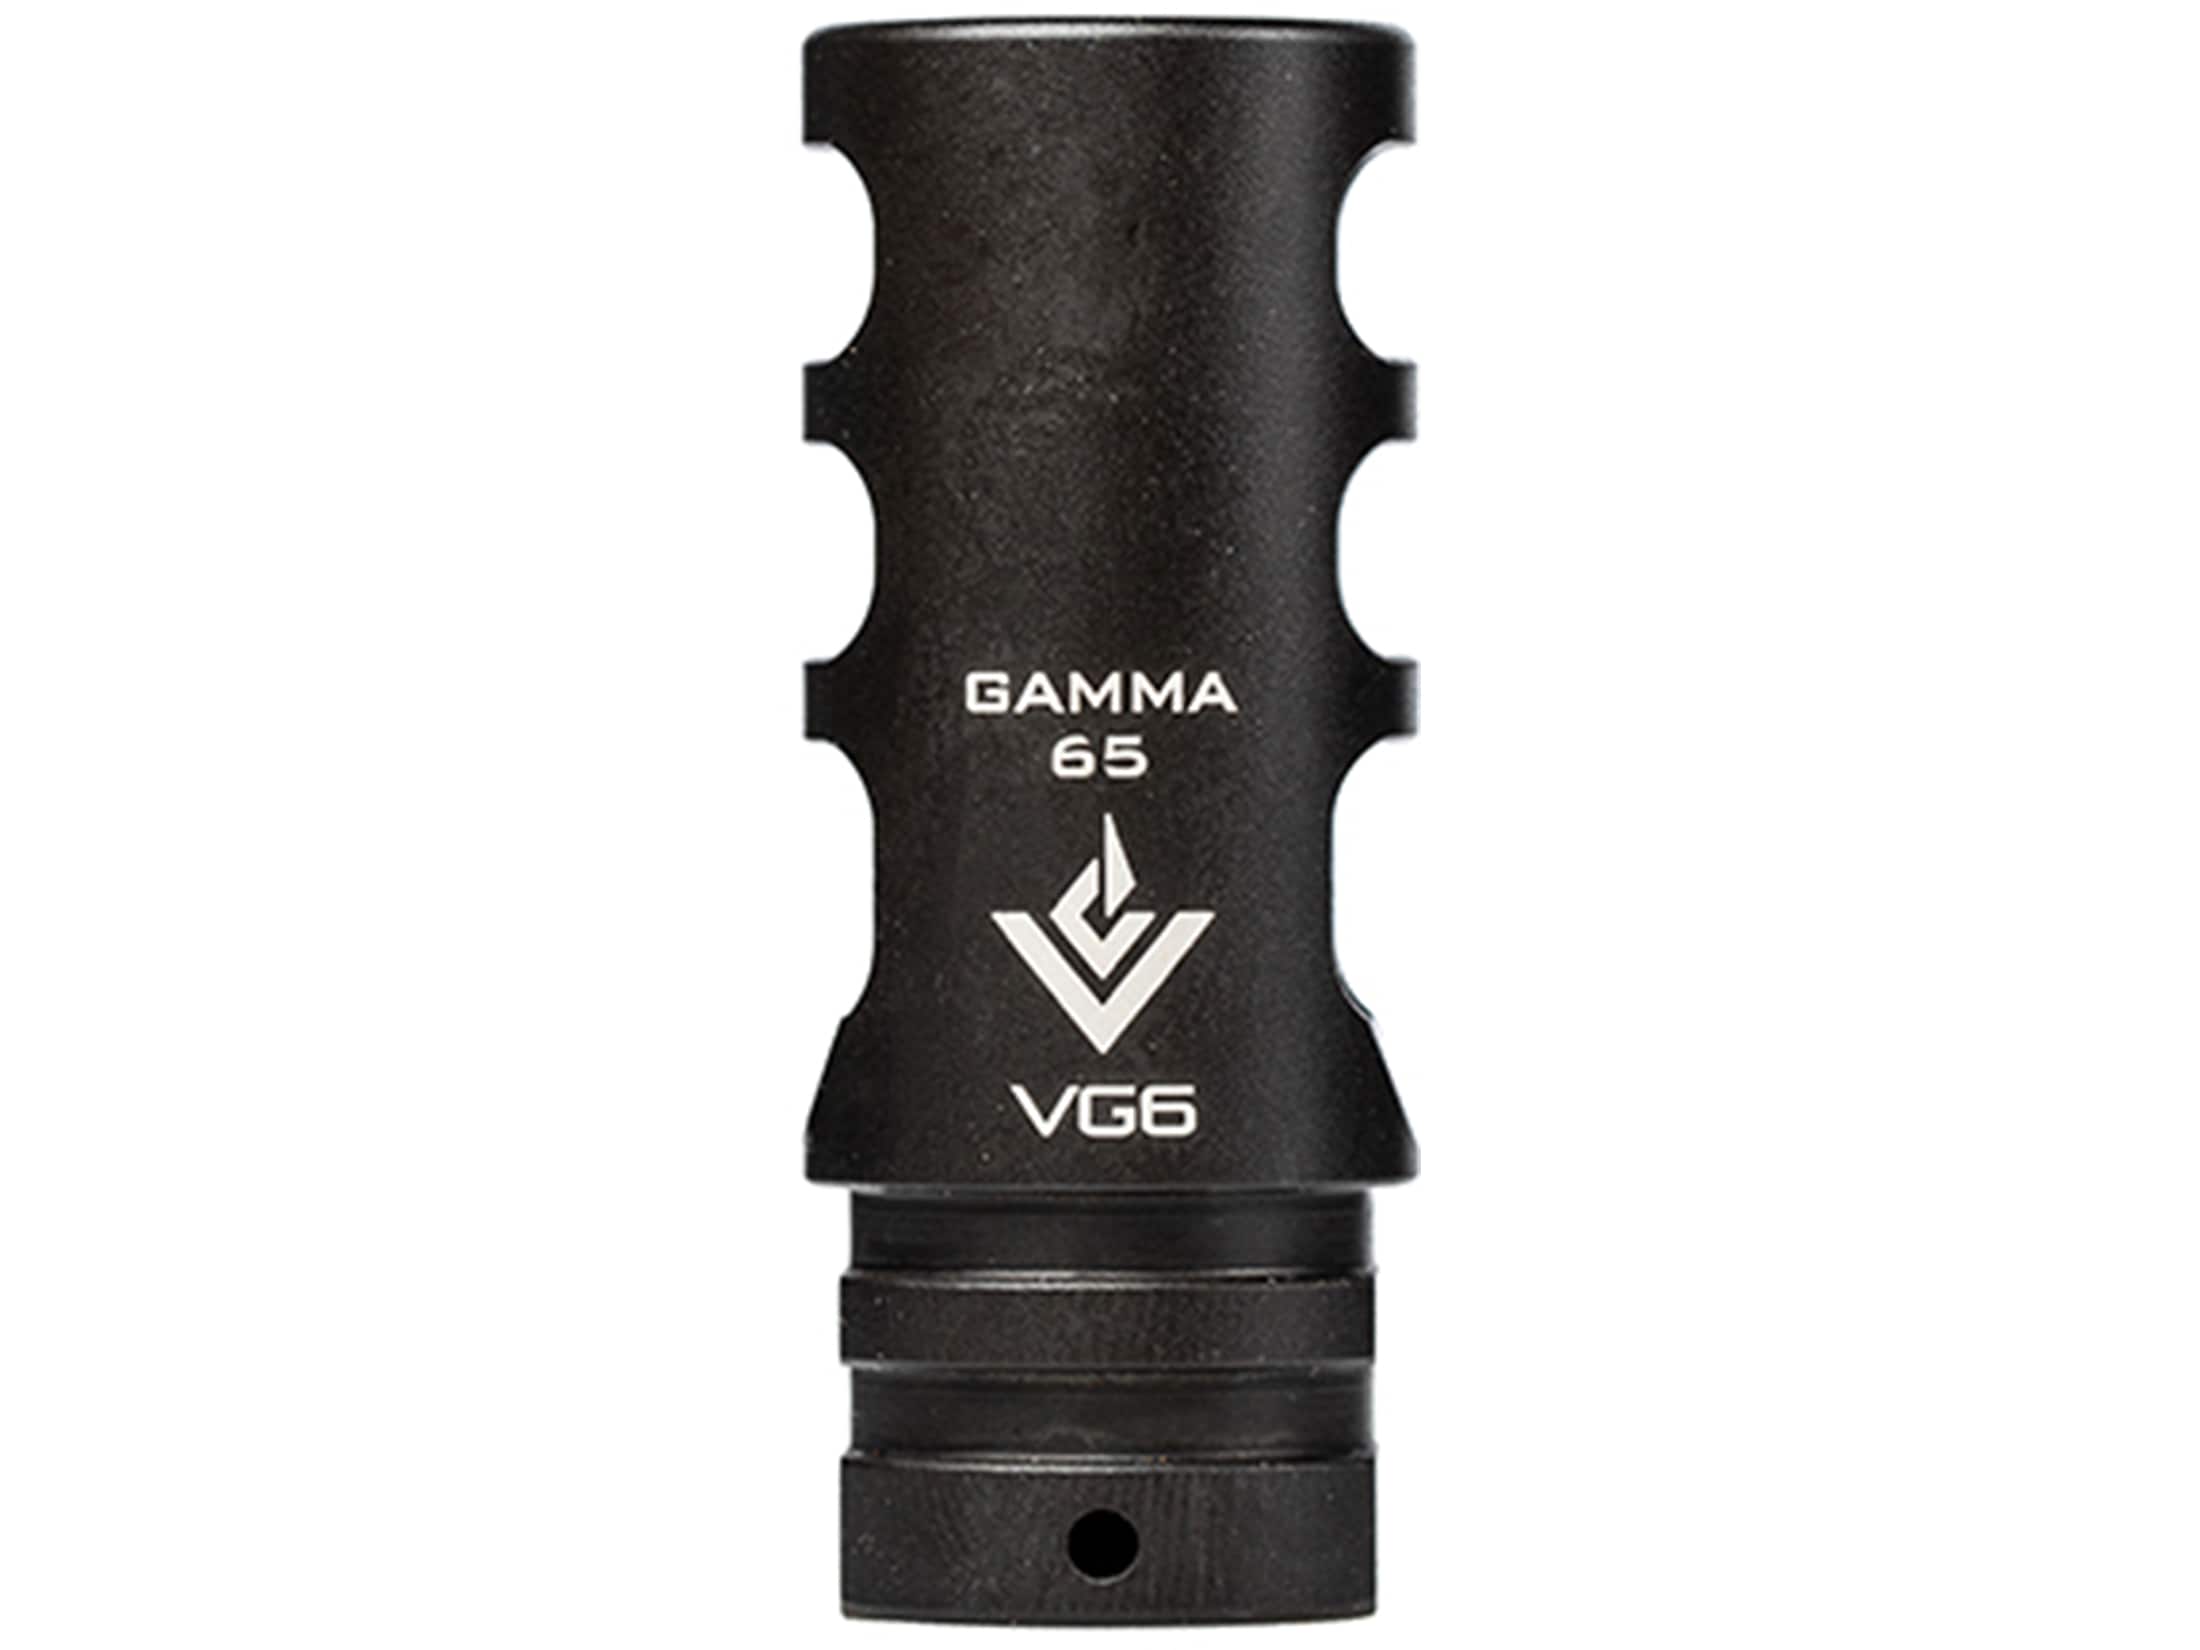 The VG6 Precision GAMMA 65 is a high performance muzzle brake for eliminati...